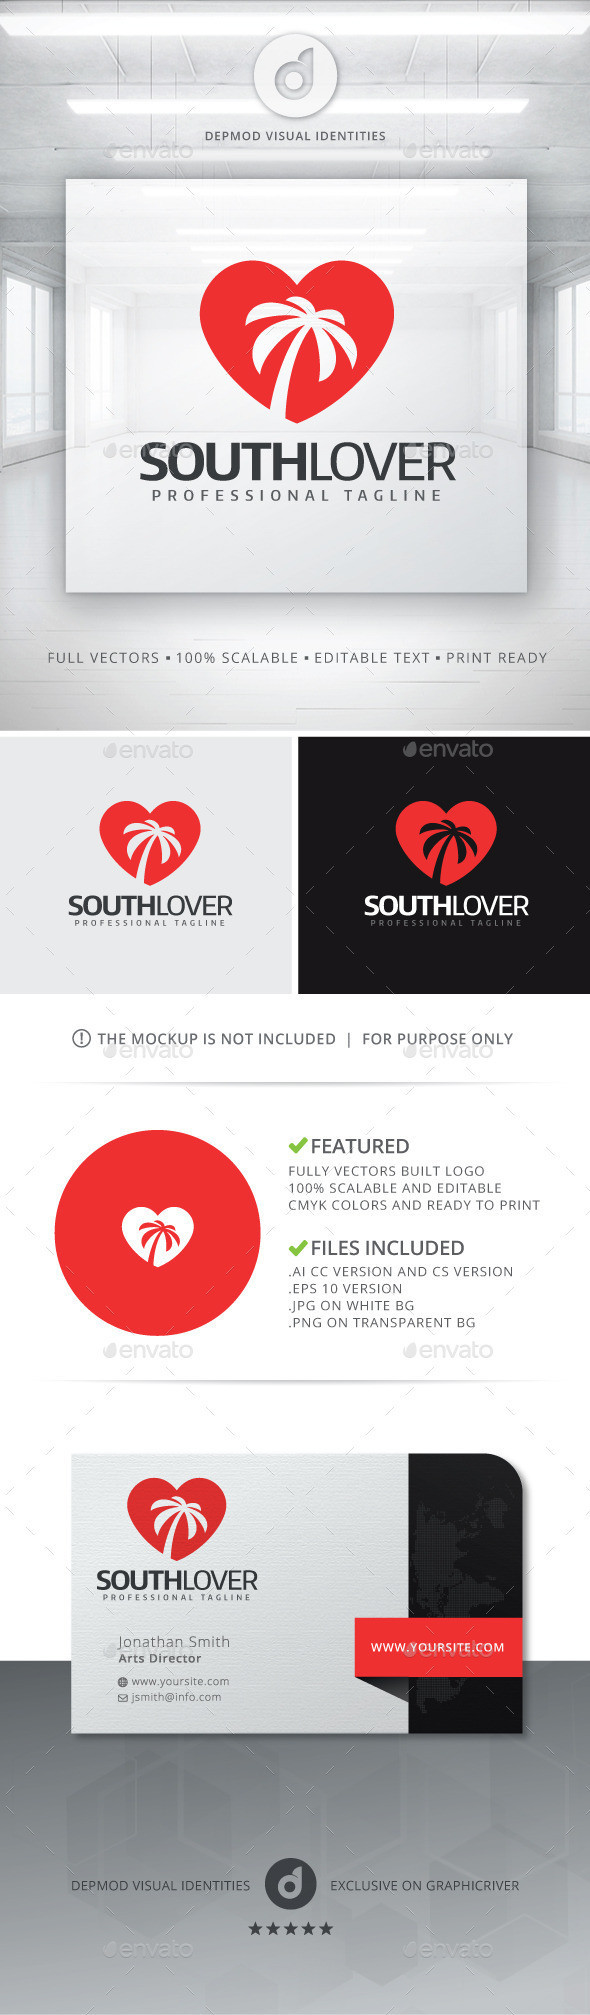 South lover logo